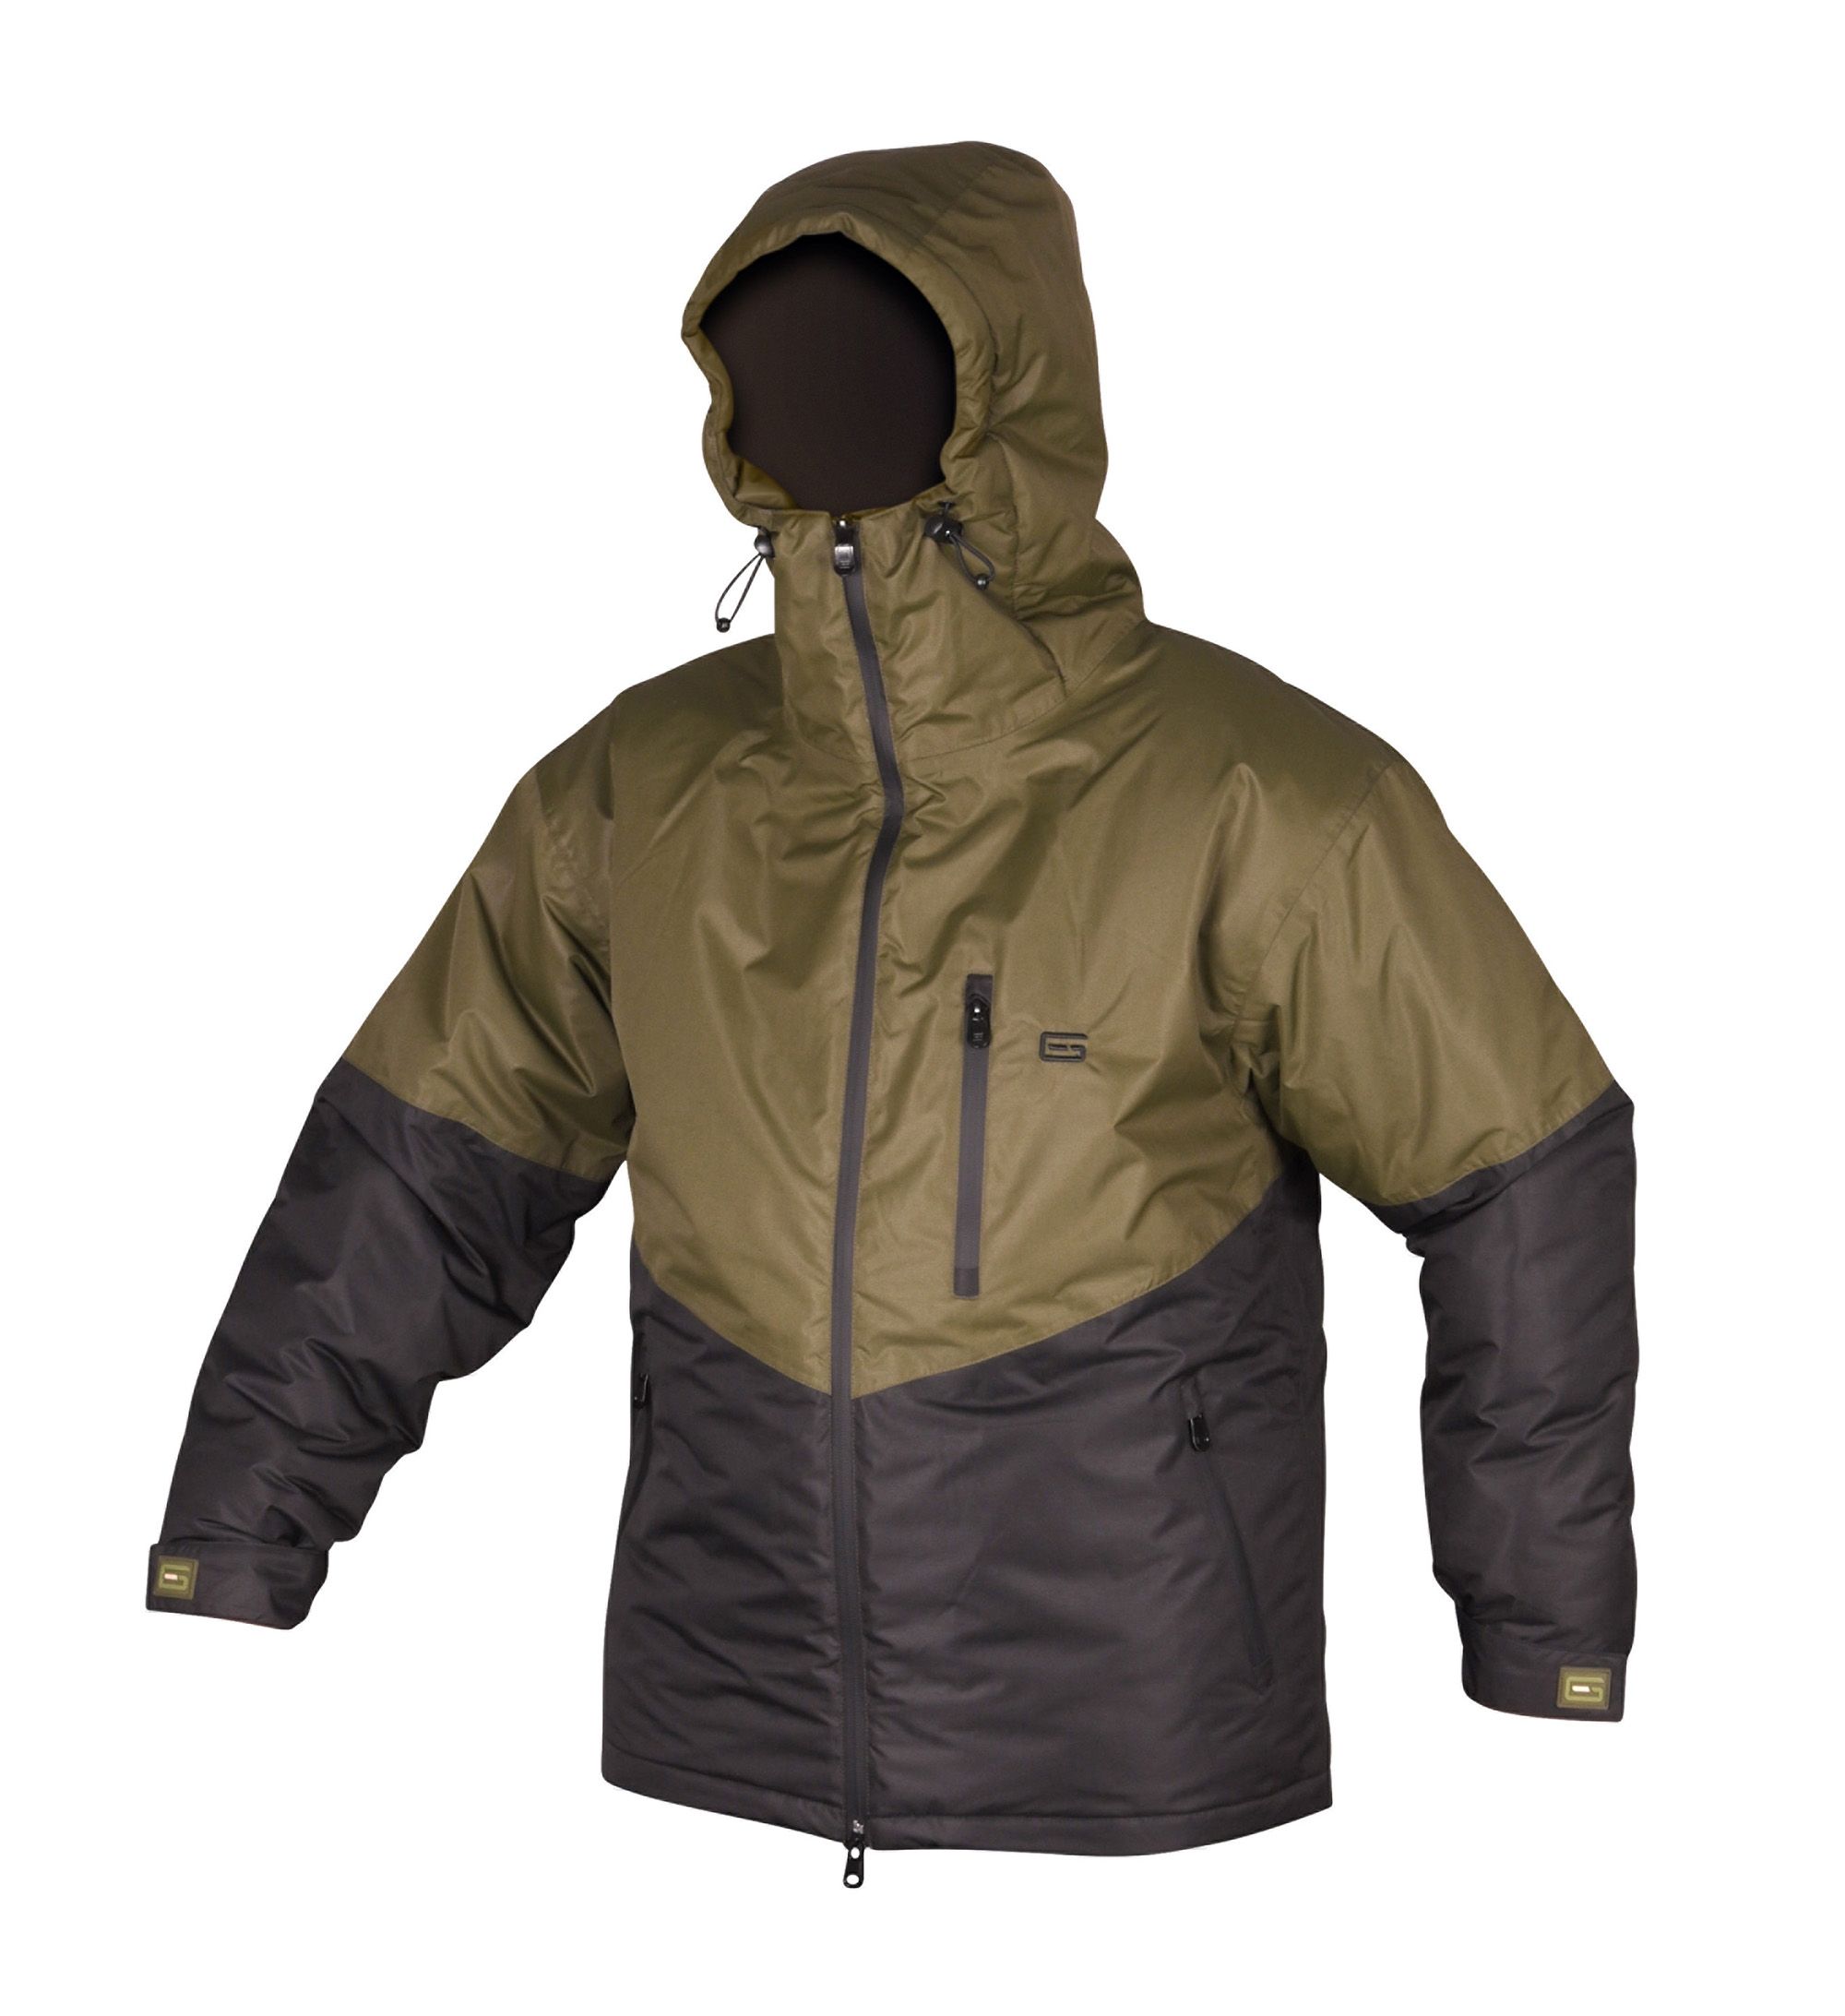 Fishing suit, thermal suit (jacket + pants) FLADEN Authentic. Thermal Suite